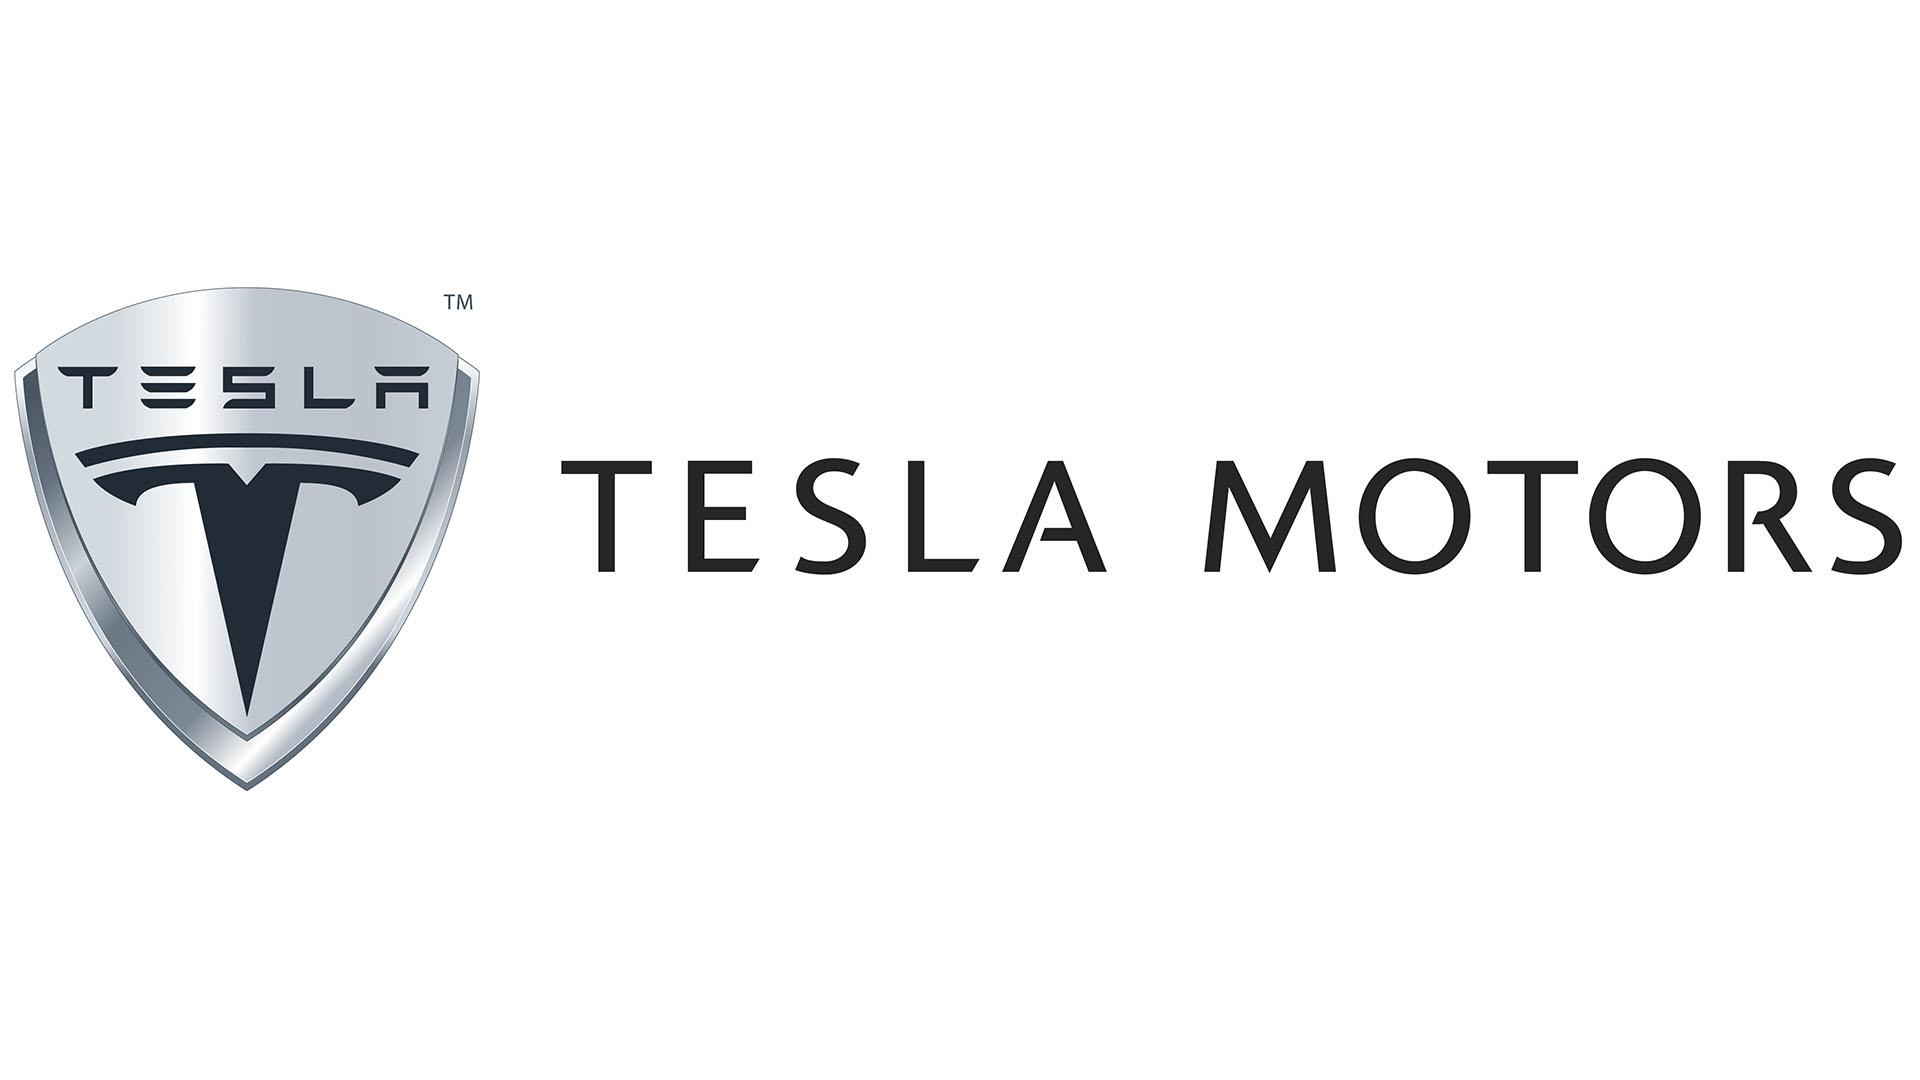 Tesla logo colors